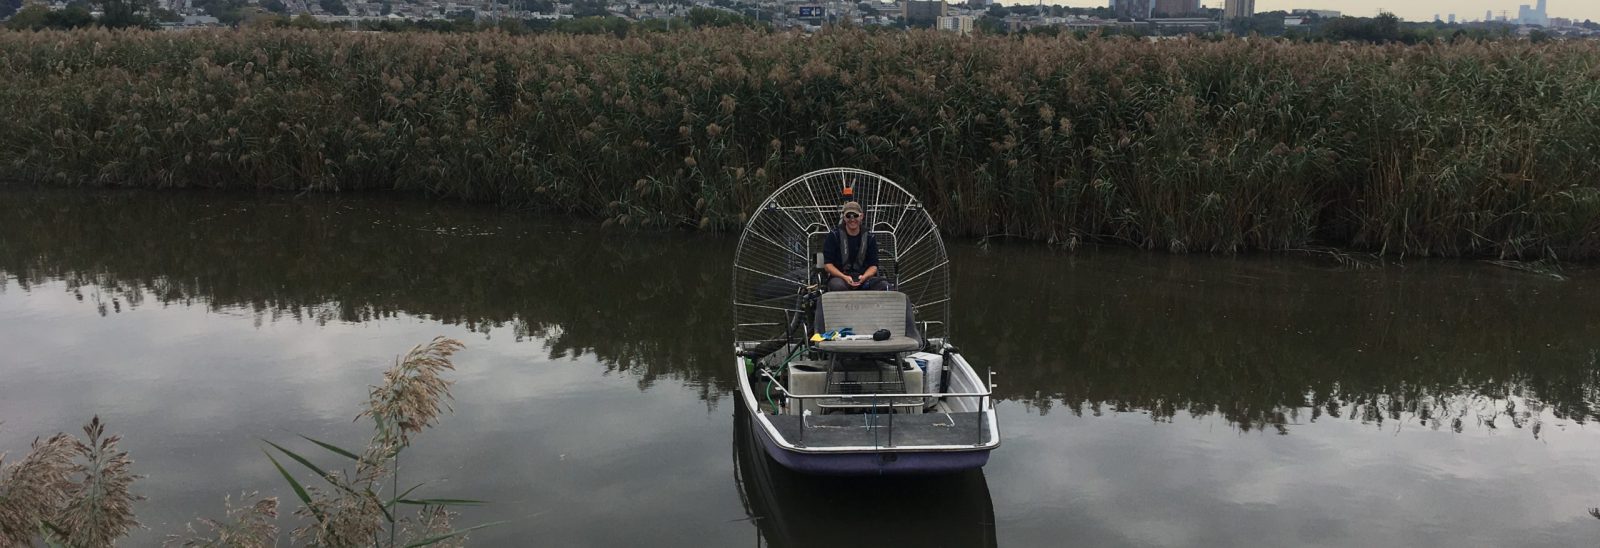 airboat phragmites treatment invasive aquatic weed control wetlands